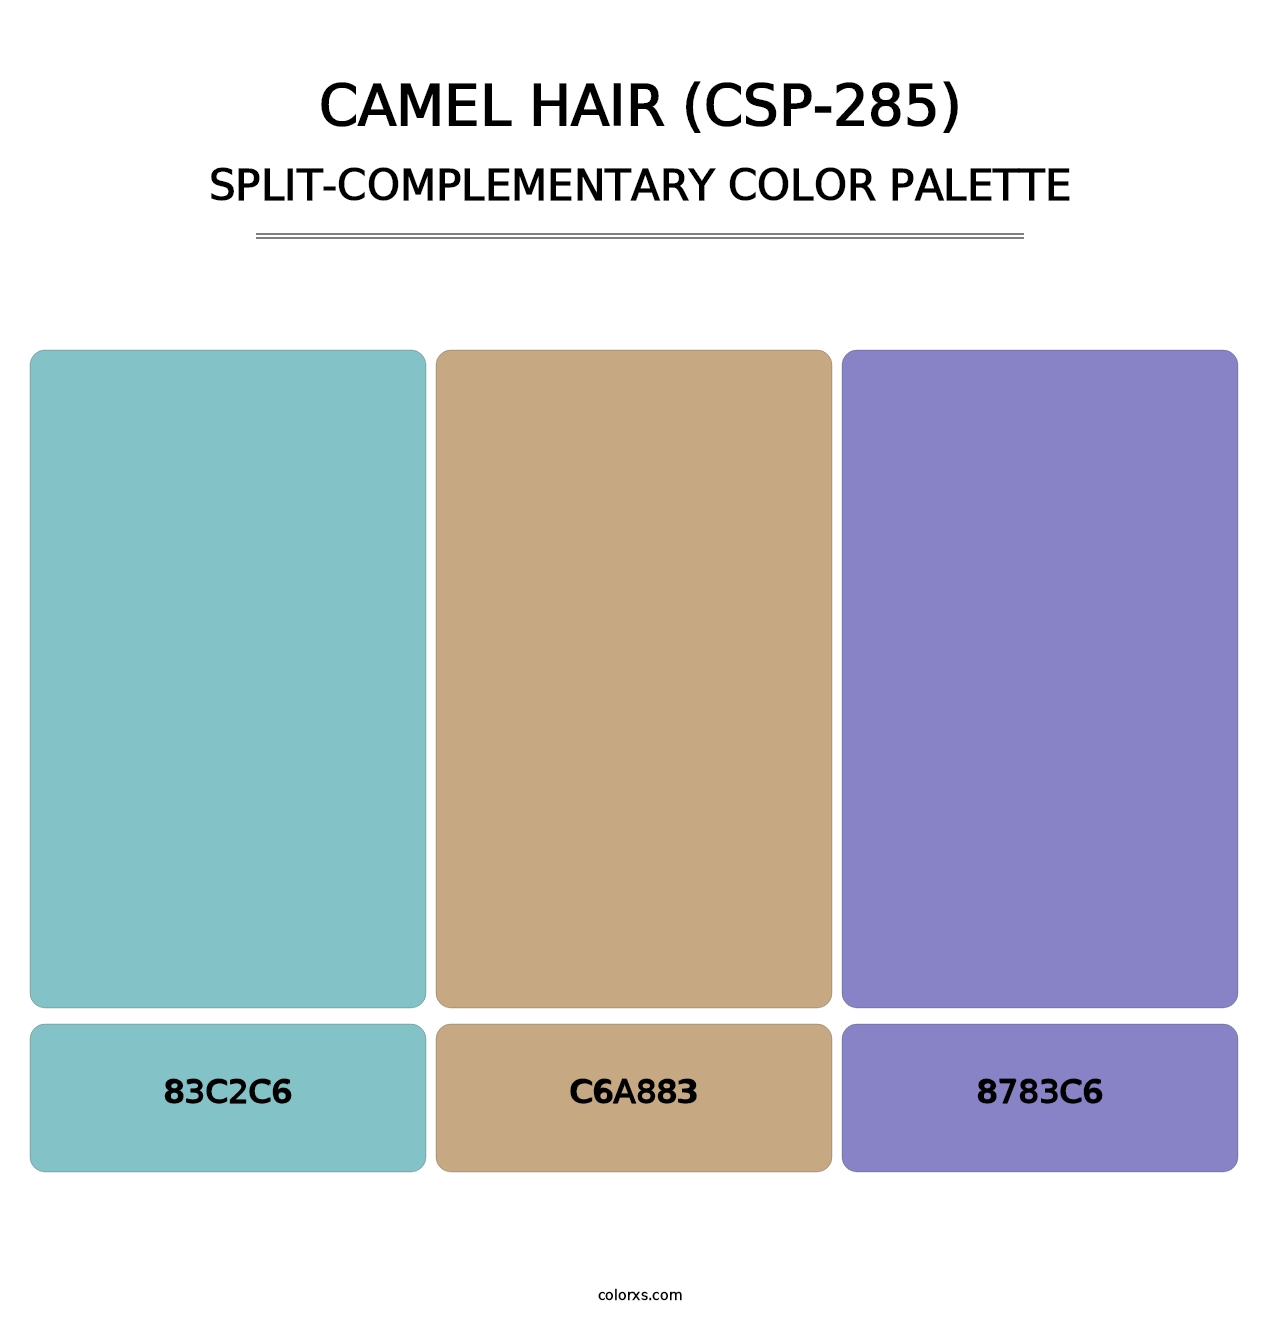 Camel Hair (CSP-285) - Split-Complementary Color Palette